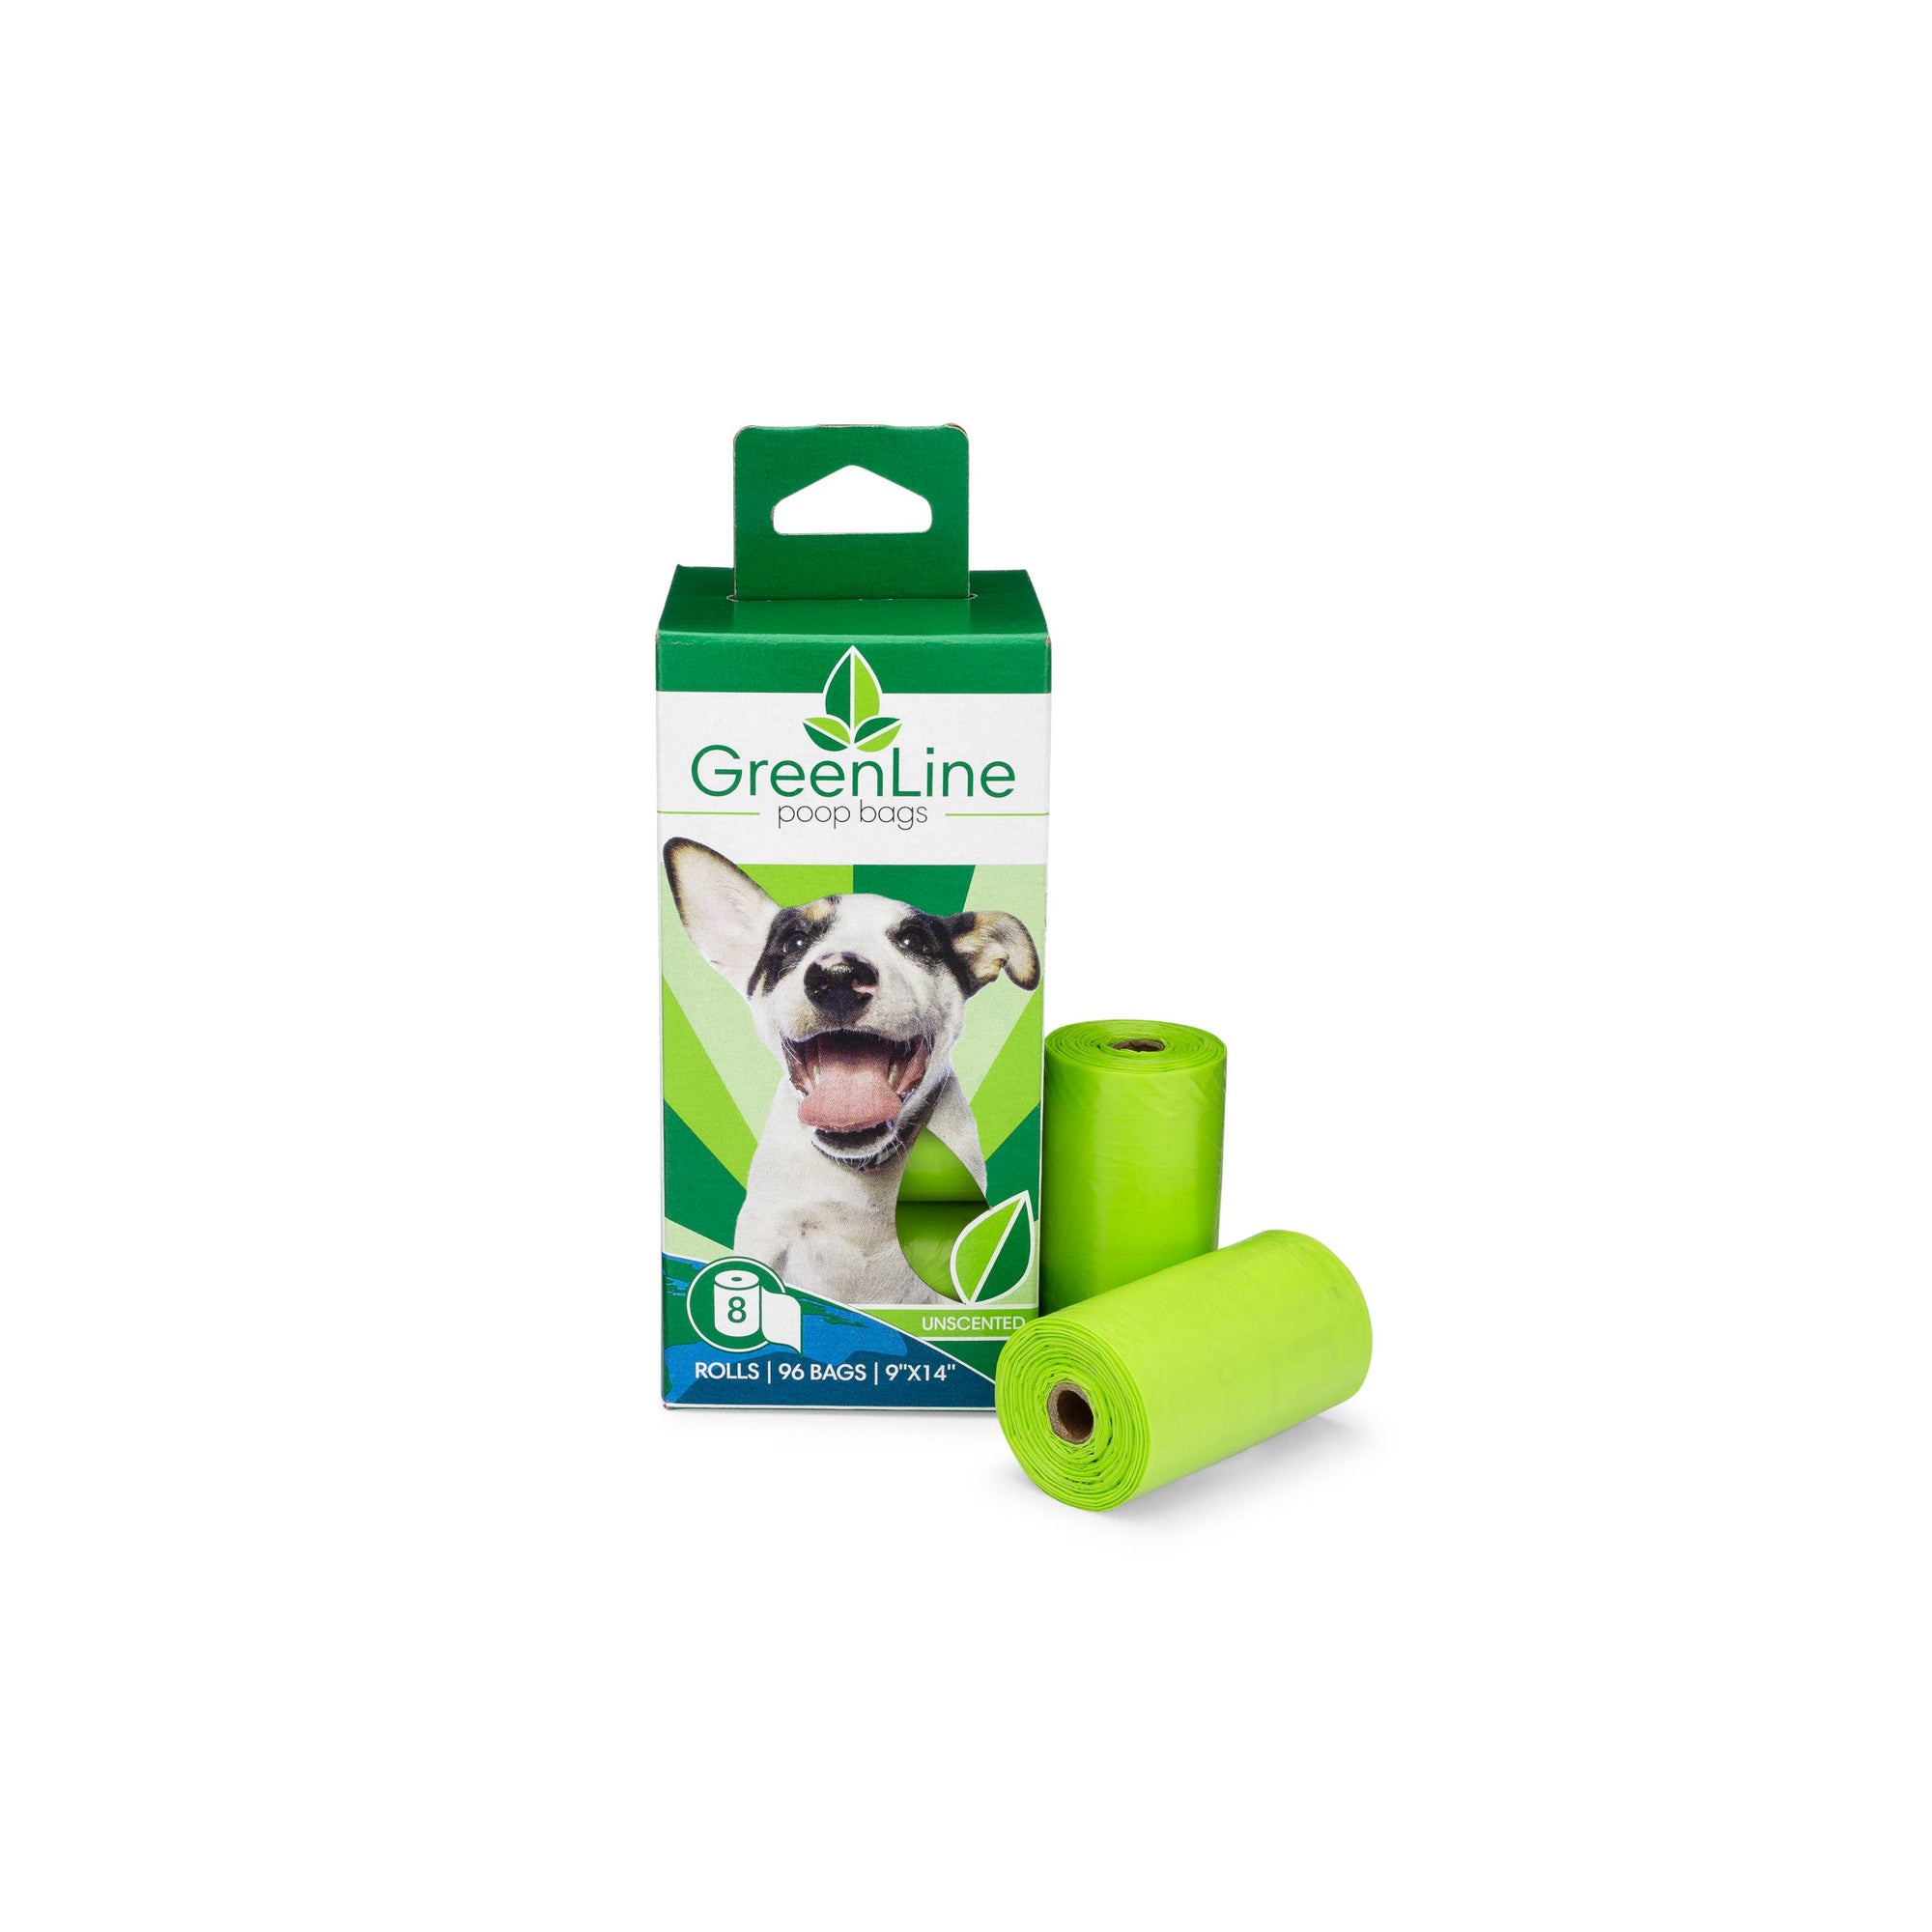 GreenLine Biodegradable Poop Bags - 8 Roll Pack - Lemon & Lavender